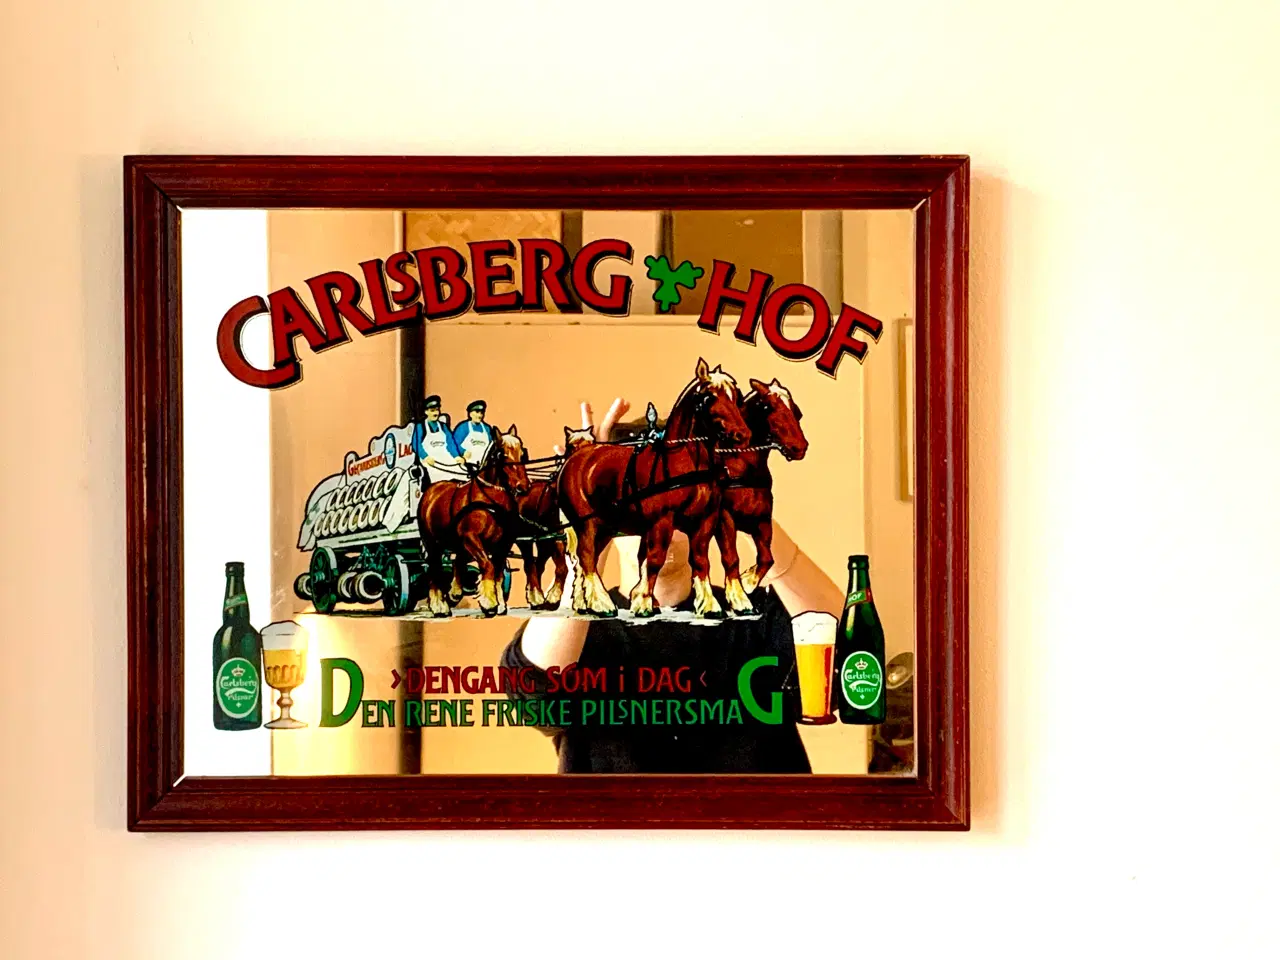 Billede 6 - Carlsberg hof - reklame øl spejl